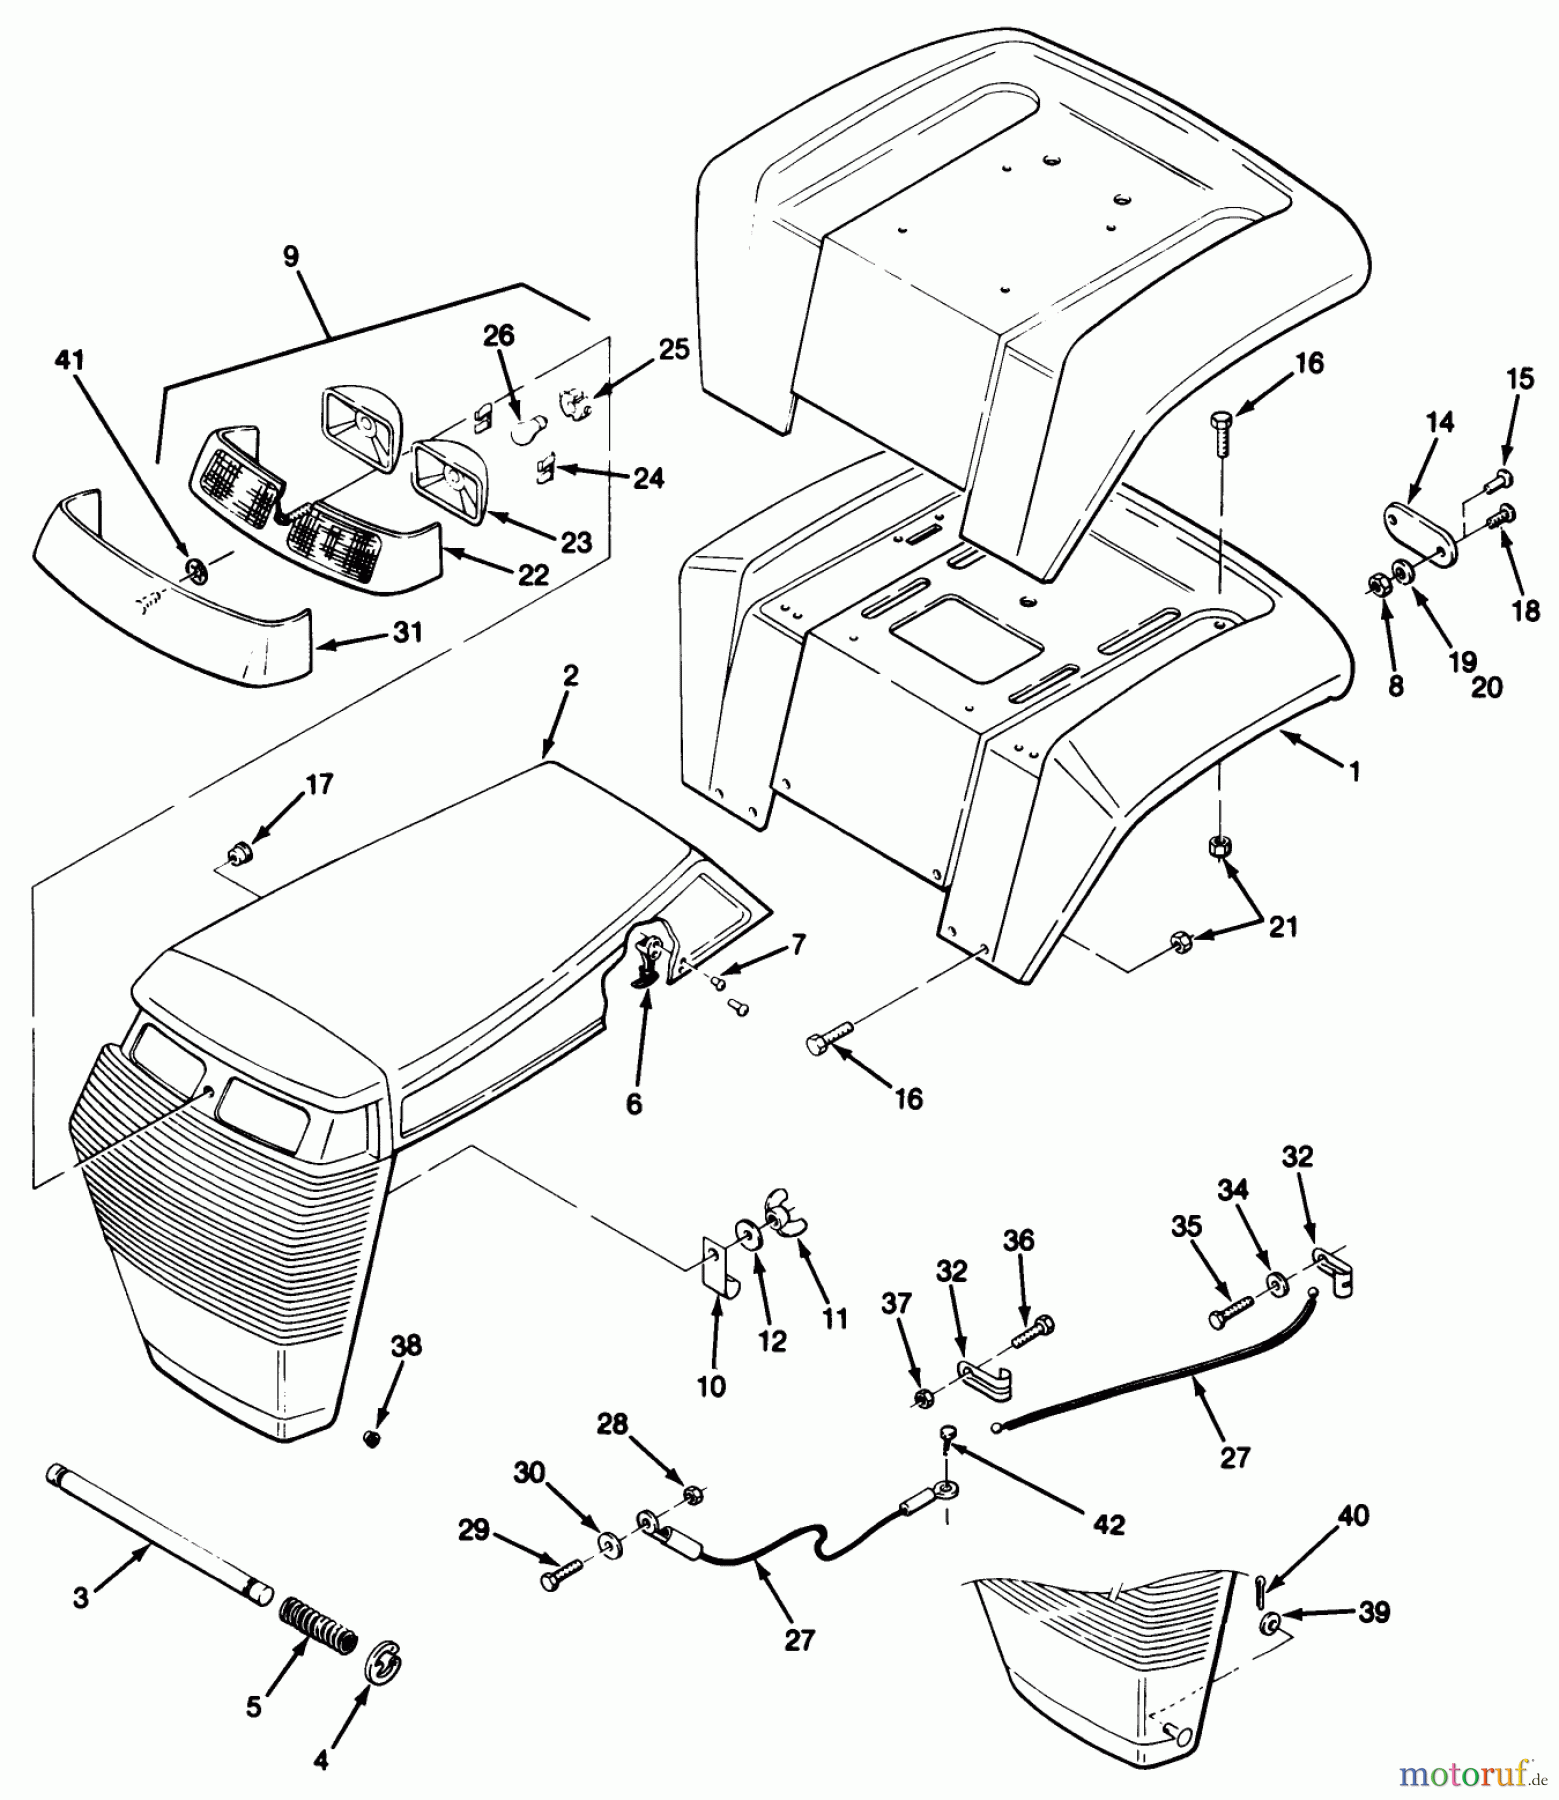  Toro Neu Mowers, Lawn & Garden Tractor Seite 1 32-12OE02 (212-H) - Toro 212-H Tractor, 1991 (1000001-1999999) BODY ASSEMBLY